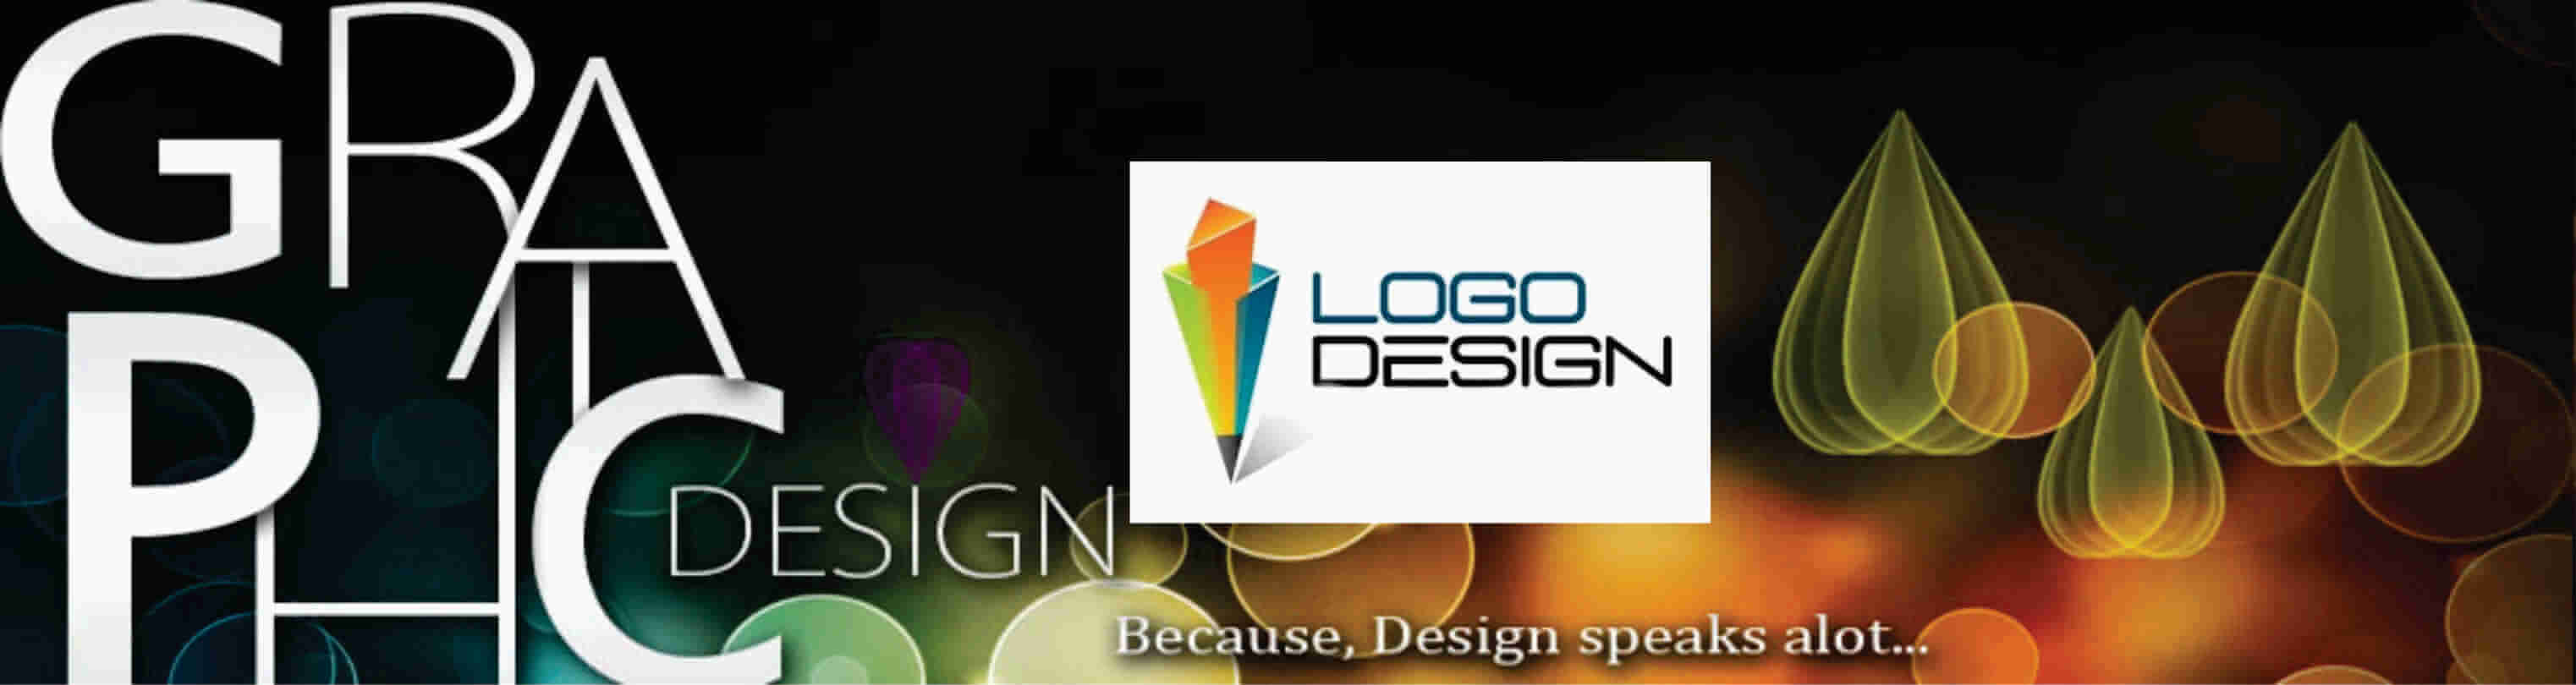 logo-design-banner